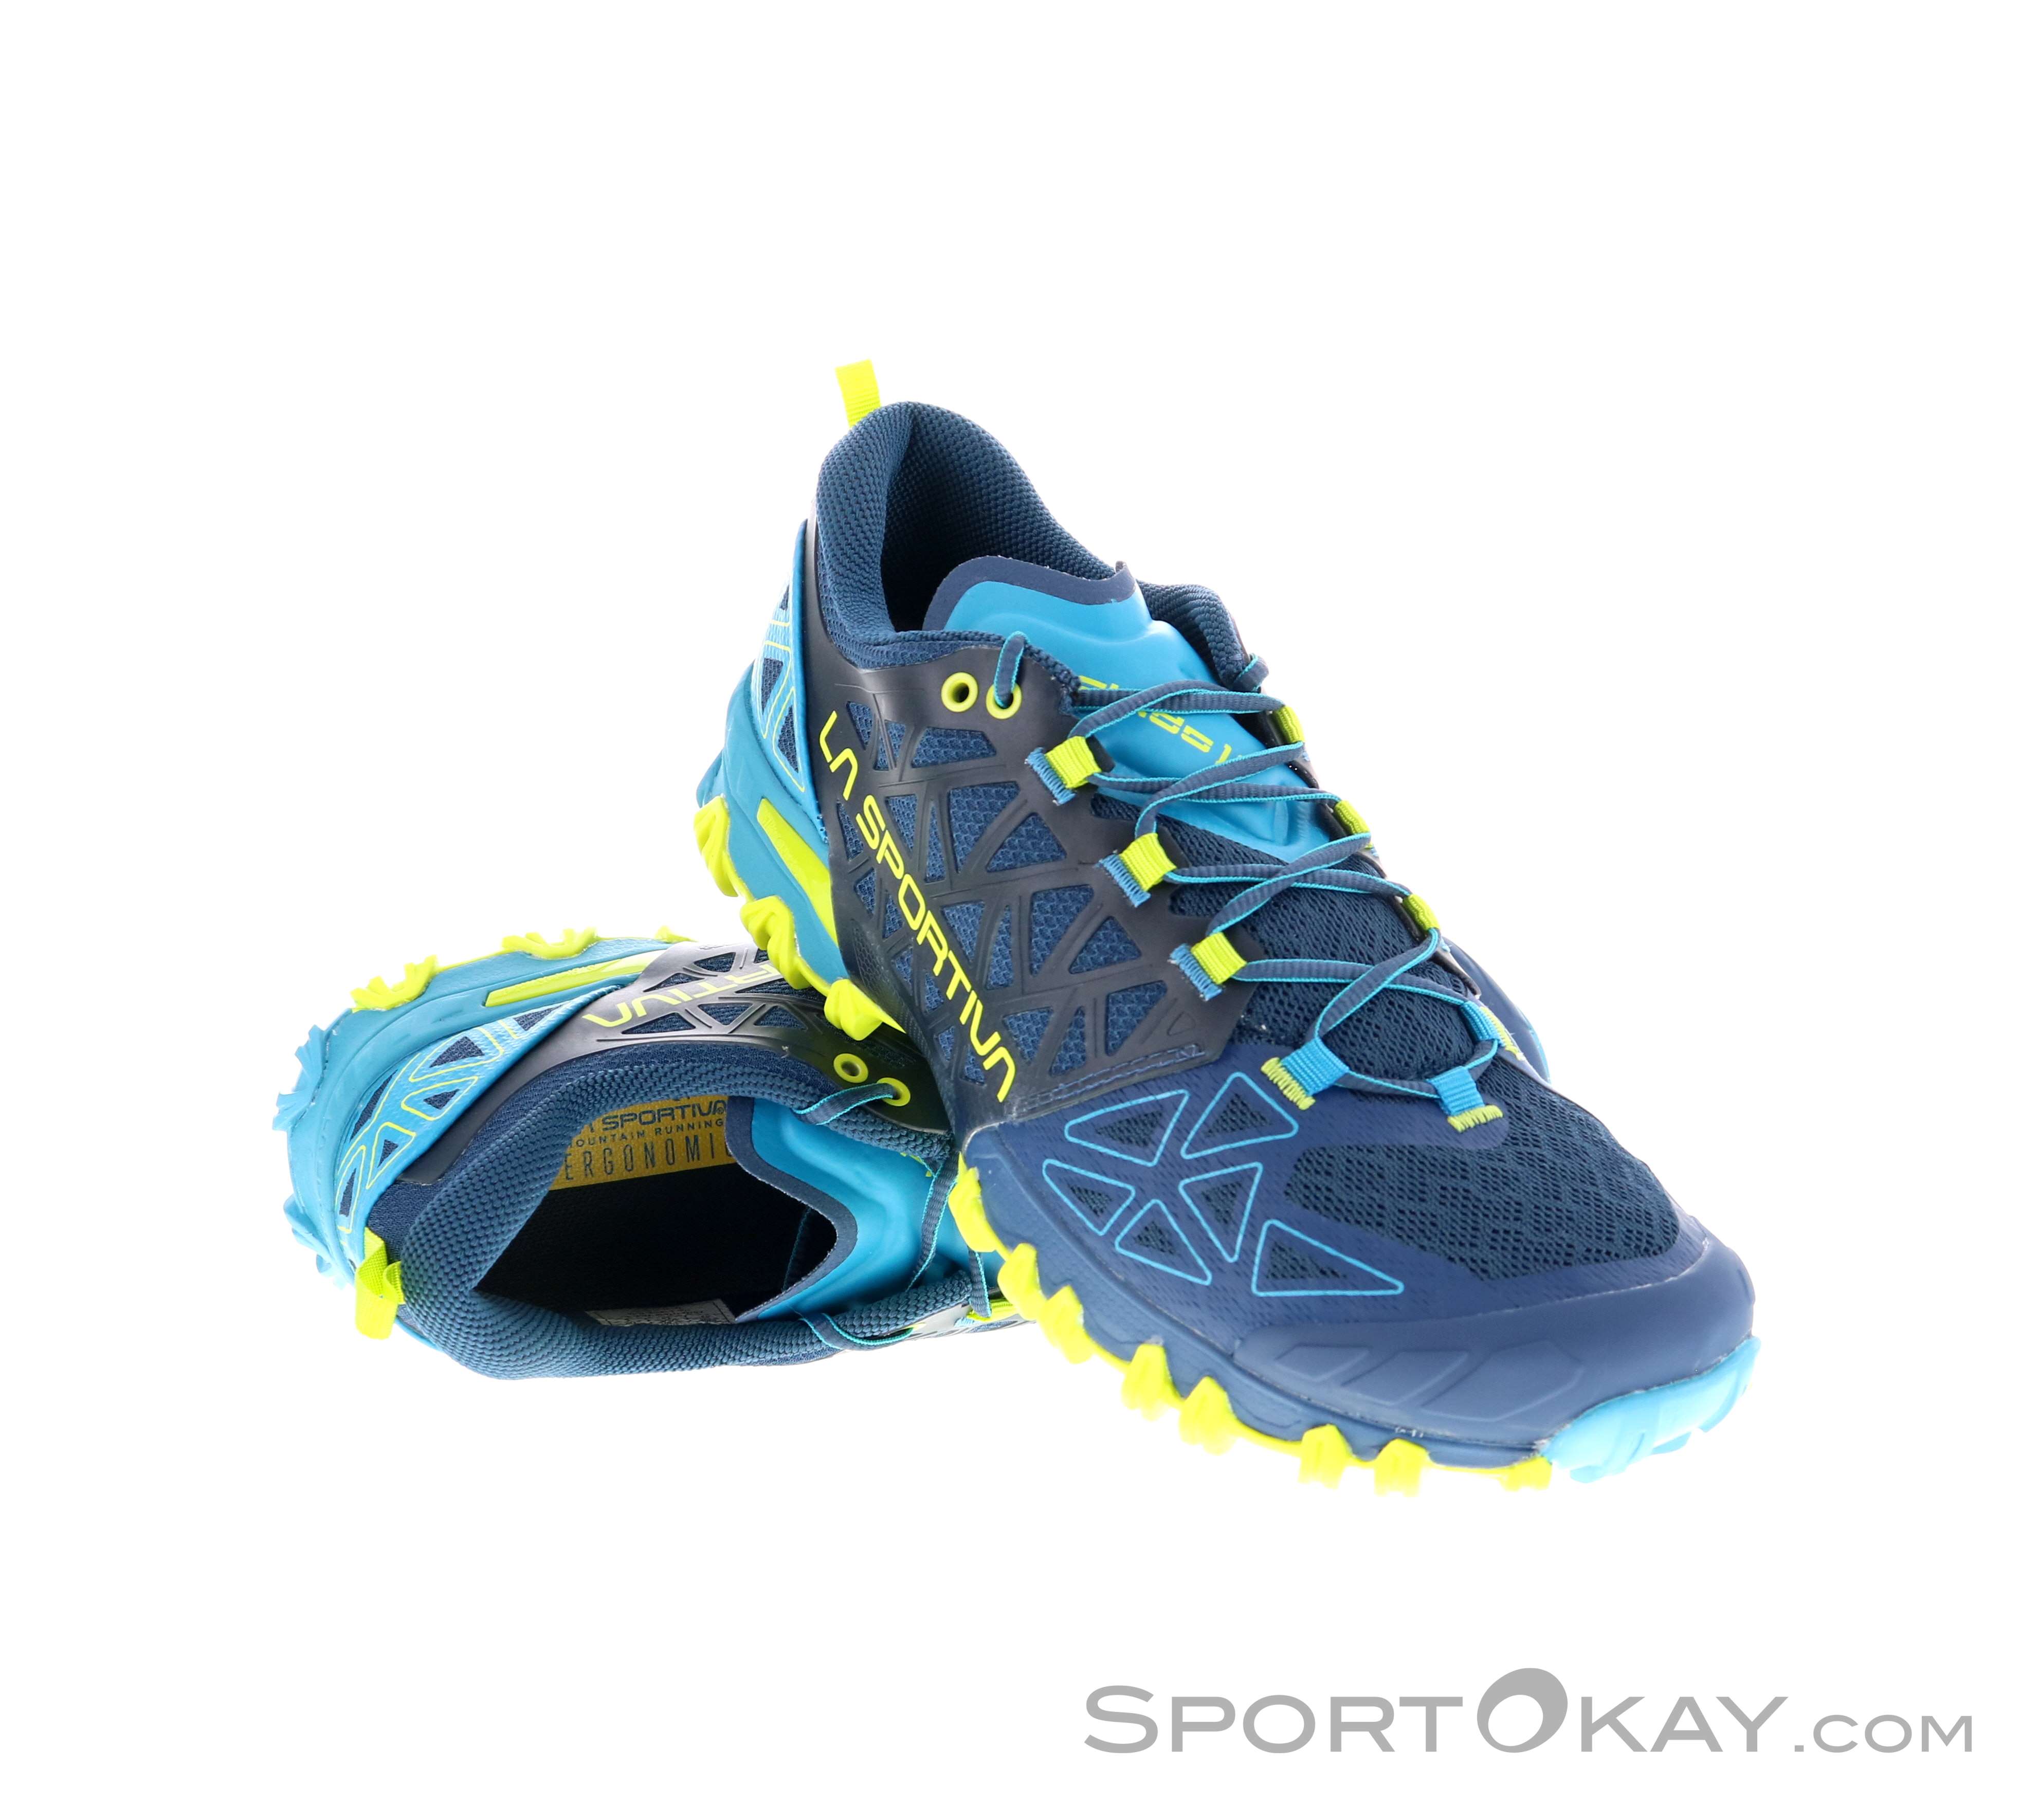 NEW La Sportiva Bushido Men's Trail Running Shoe Blue/Papaya 